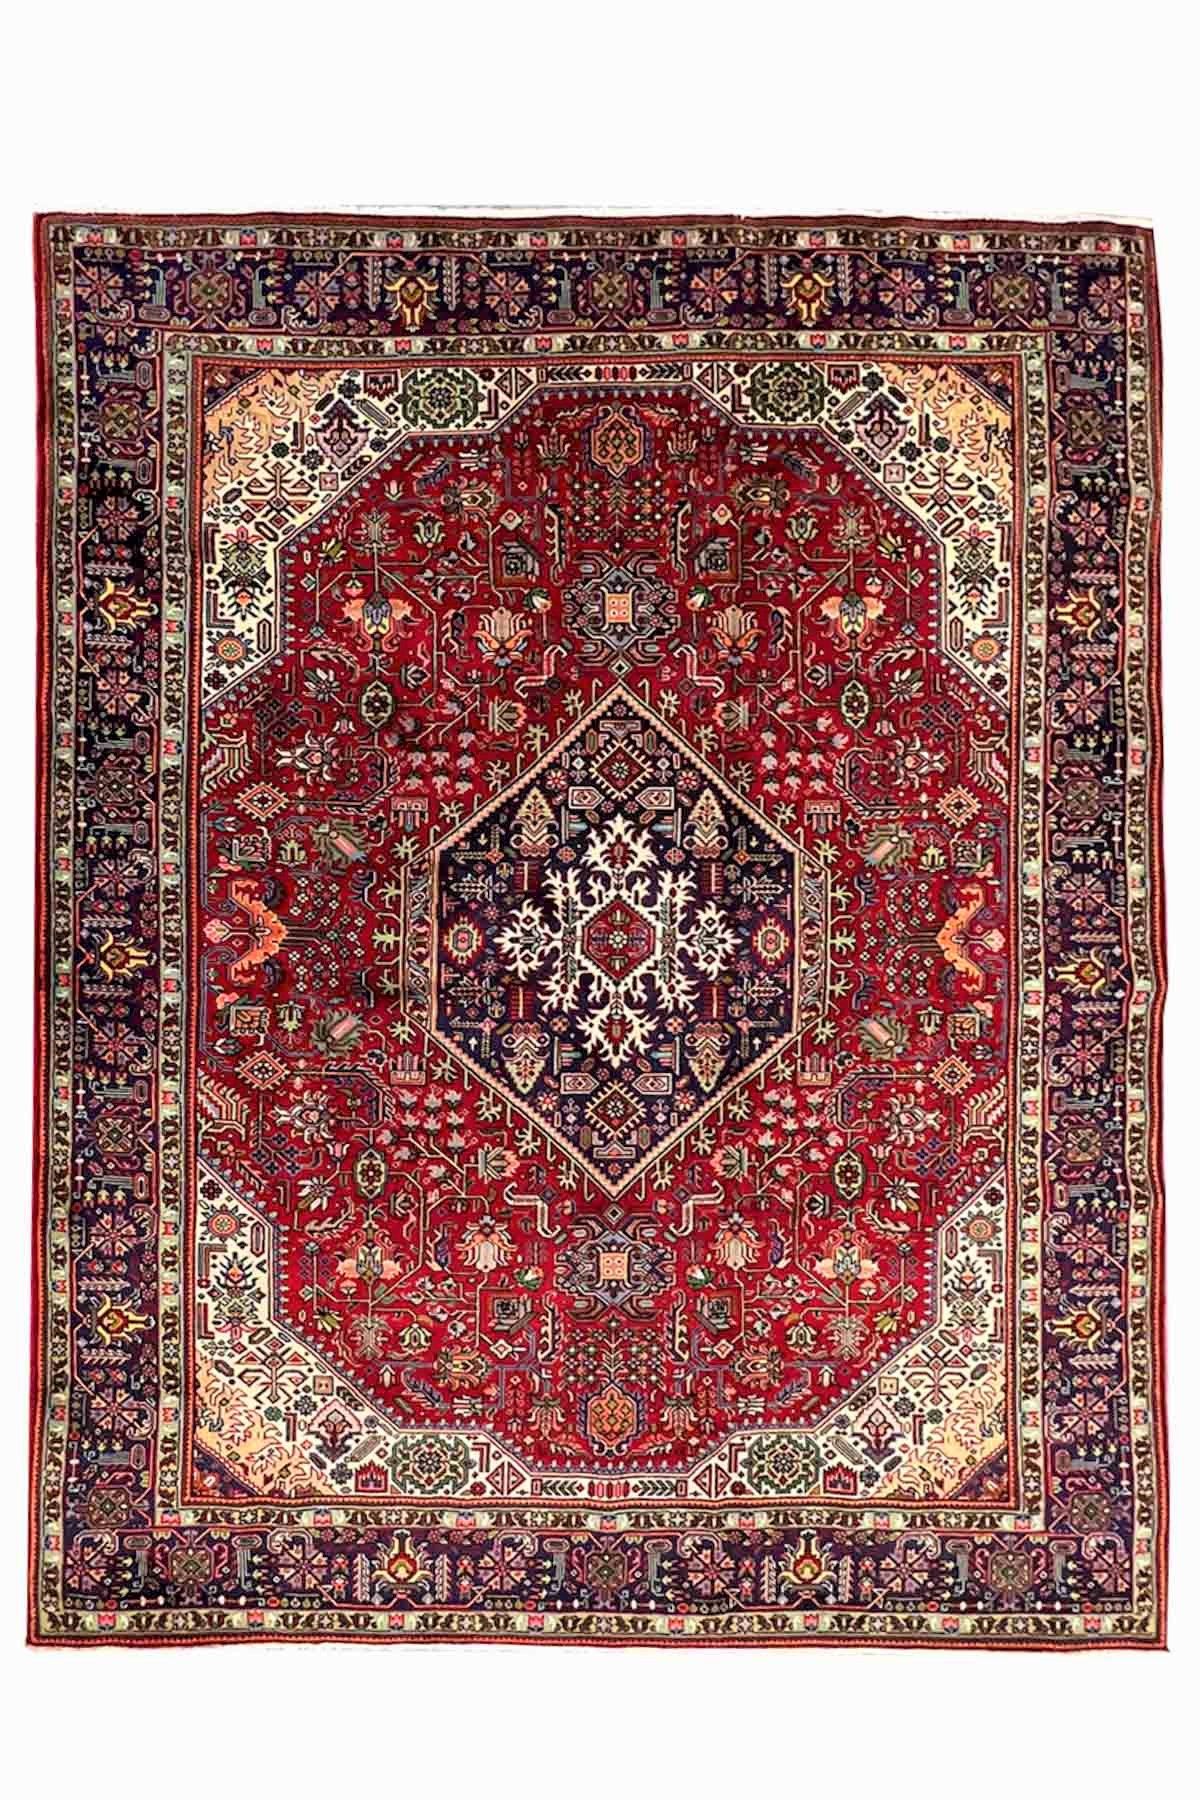 Classic Persian Handmade Rug 3 5 X 2 55